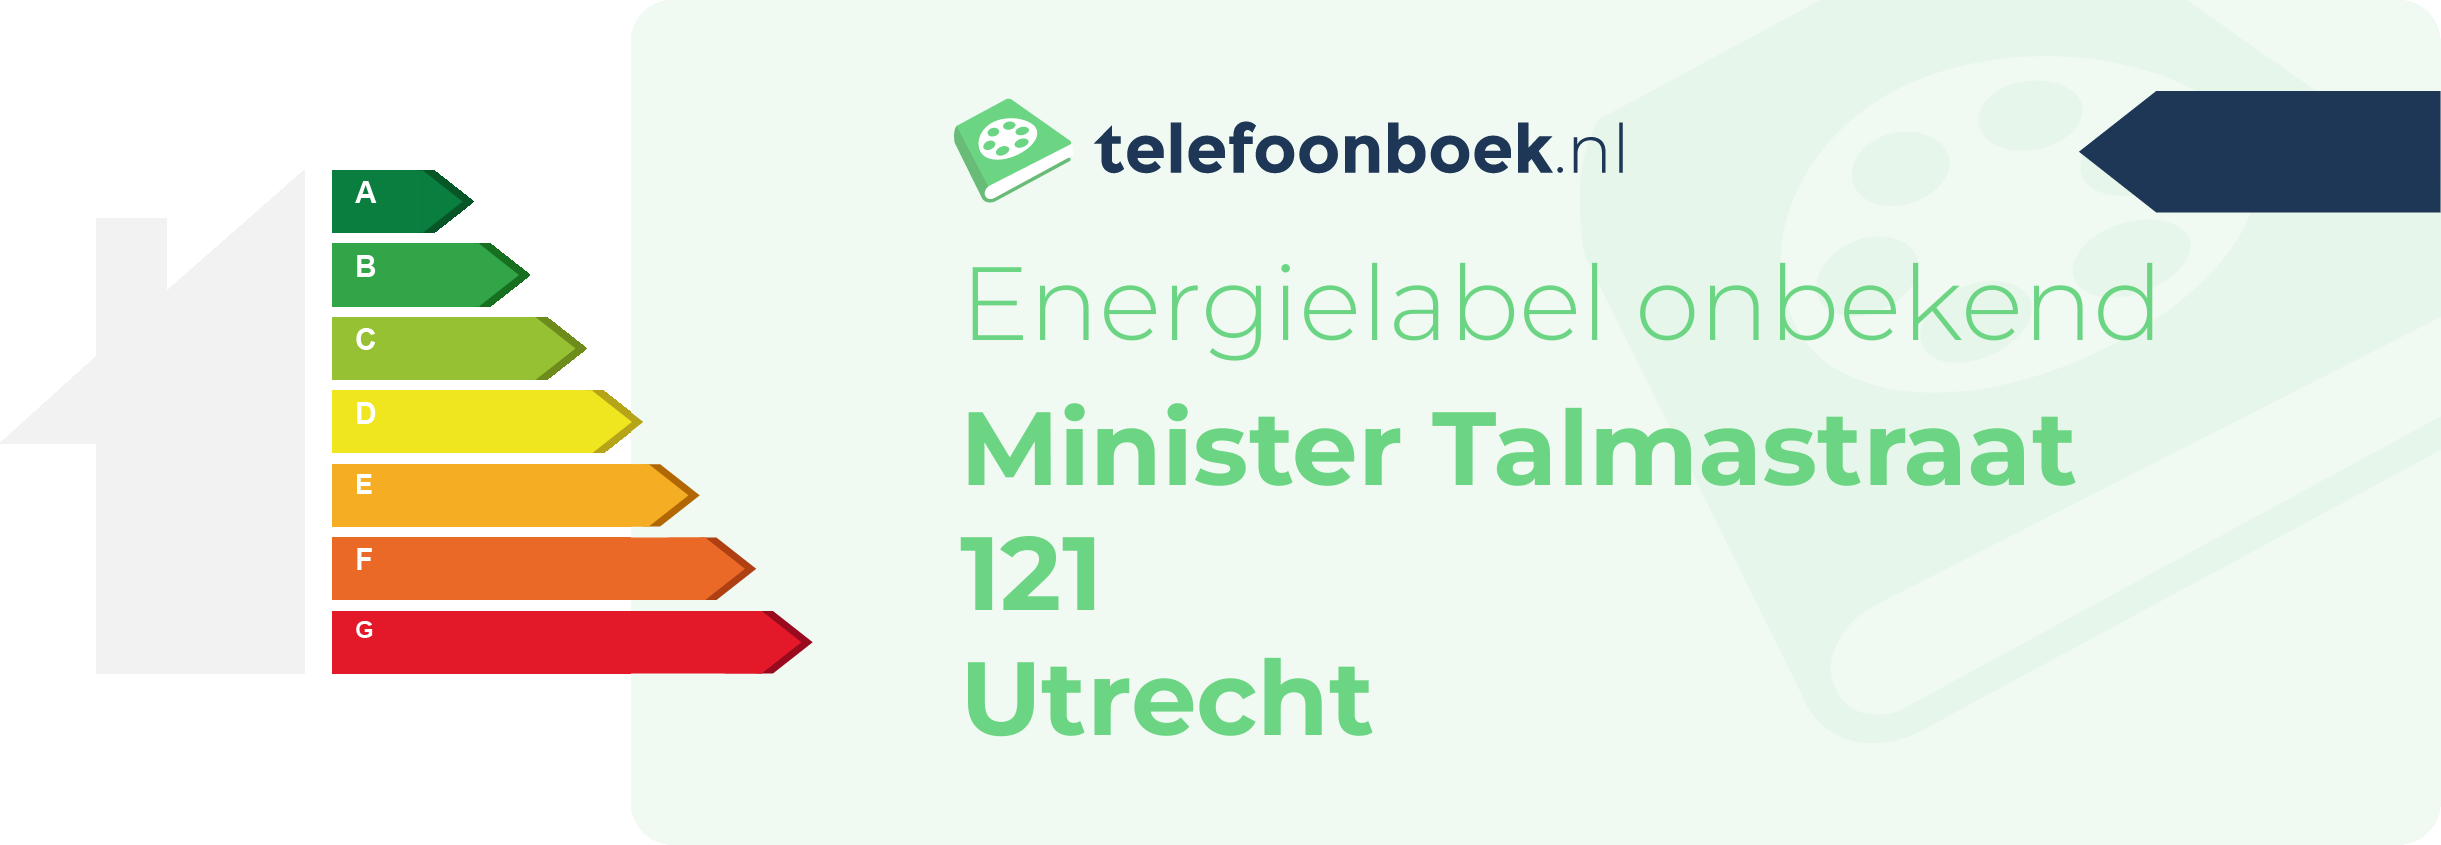 Energielabel Minister Talmastraat 121 Utrecht